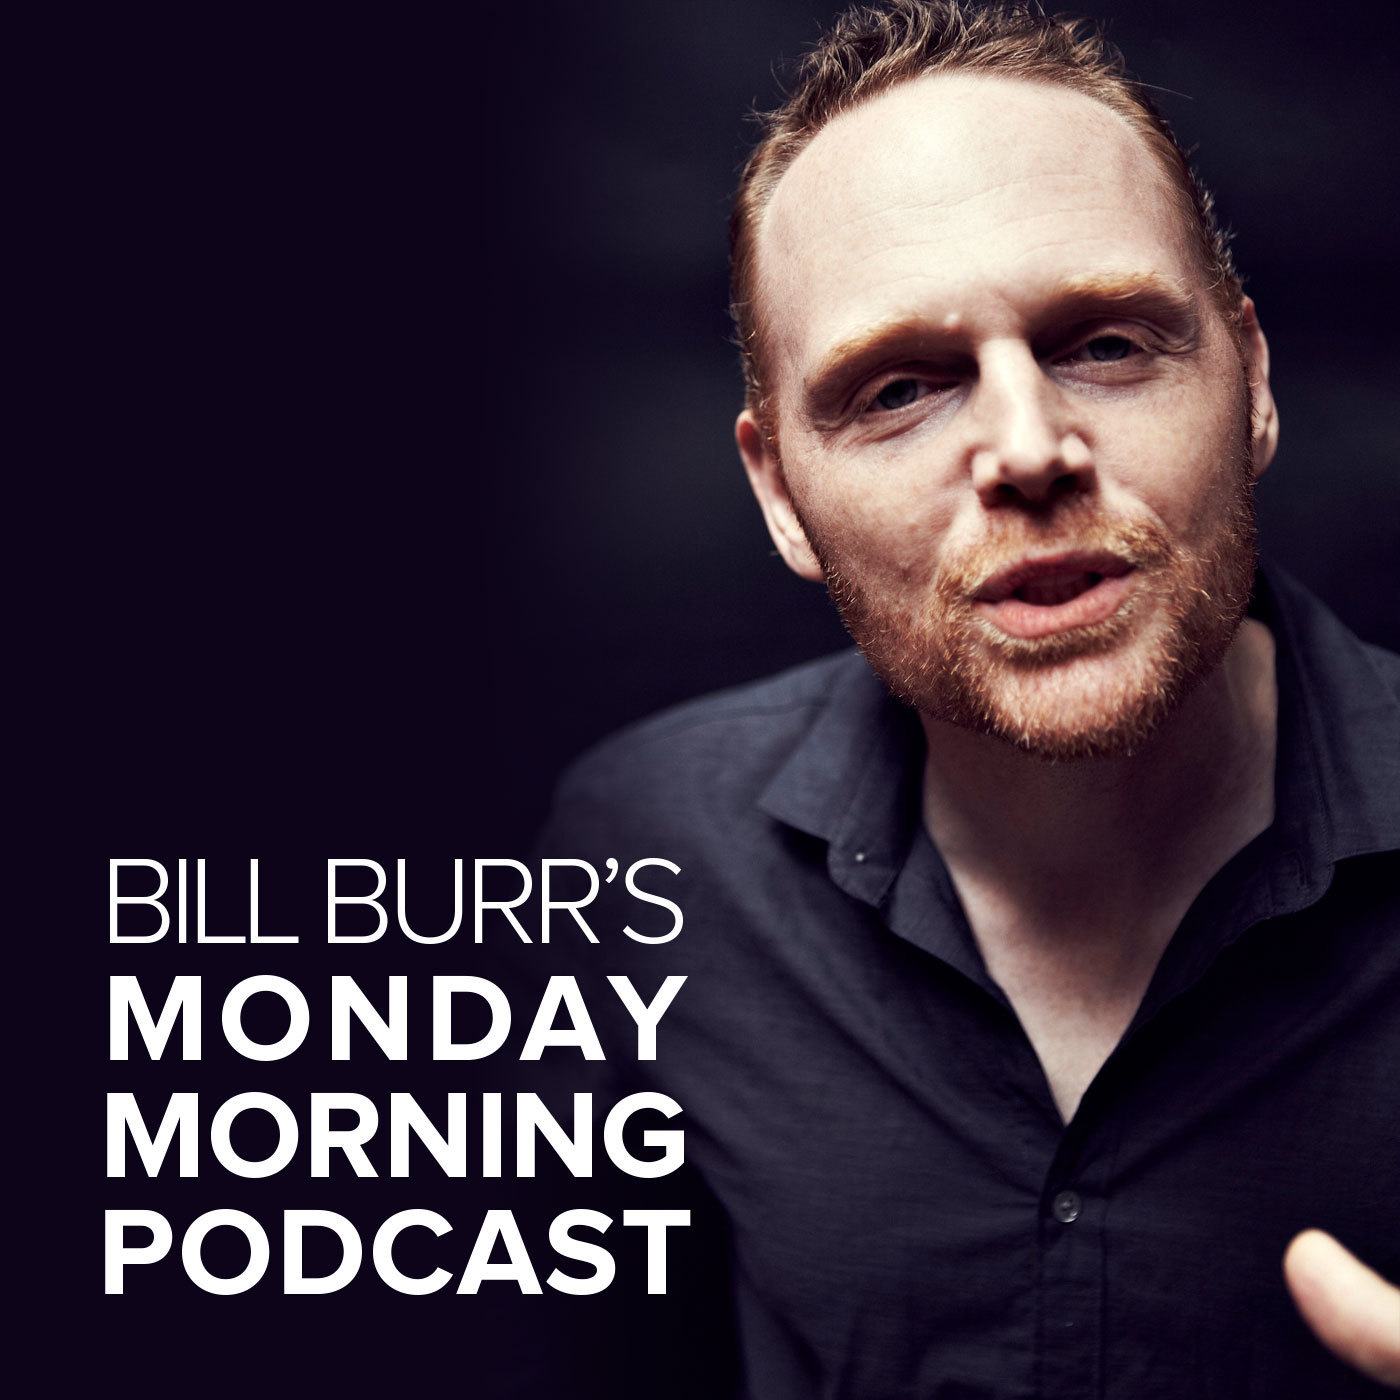 Monday Morning Podcast 2-24-14